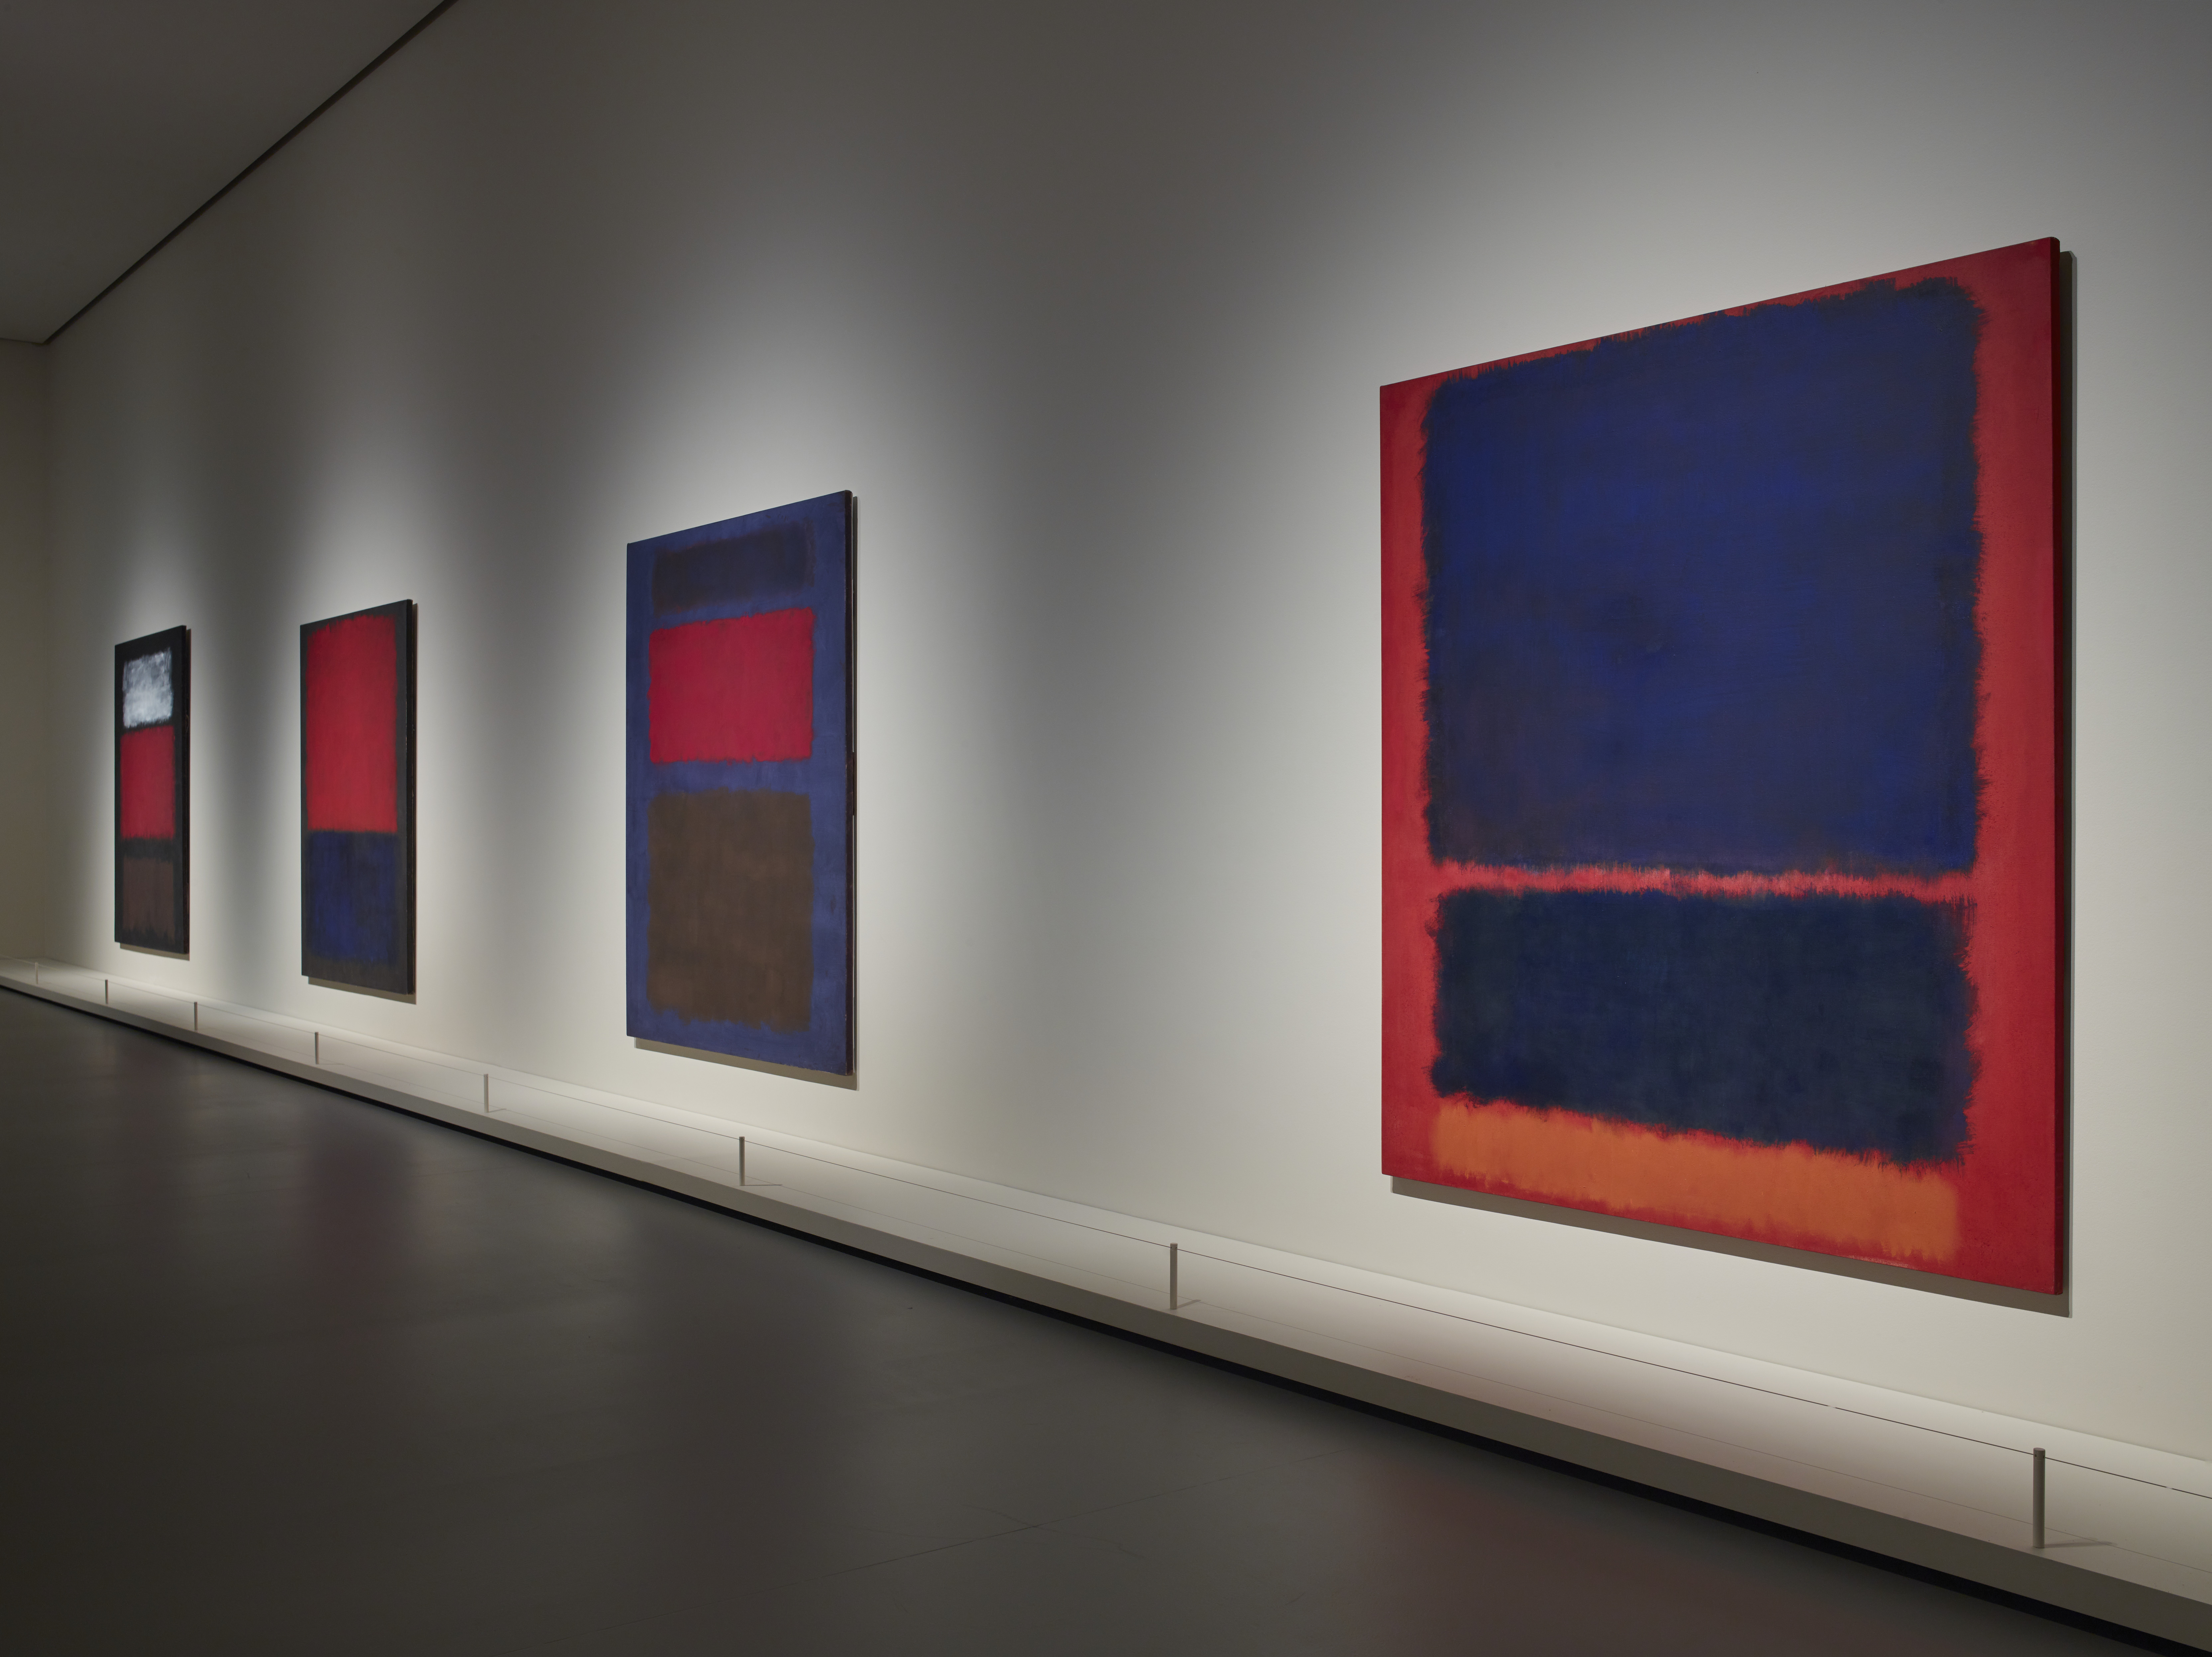 Fondation Louis Vuitton hosts major Mark Rothko retrospective from